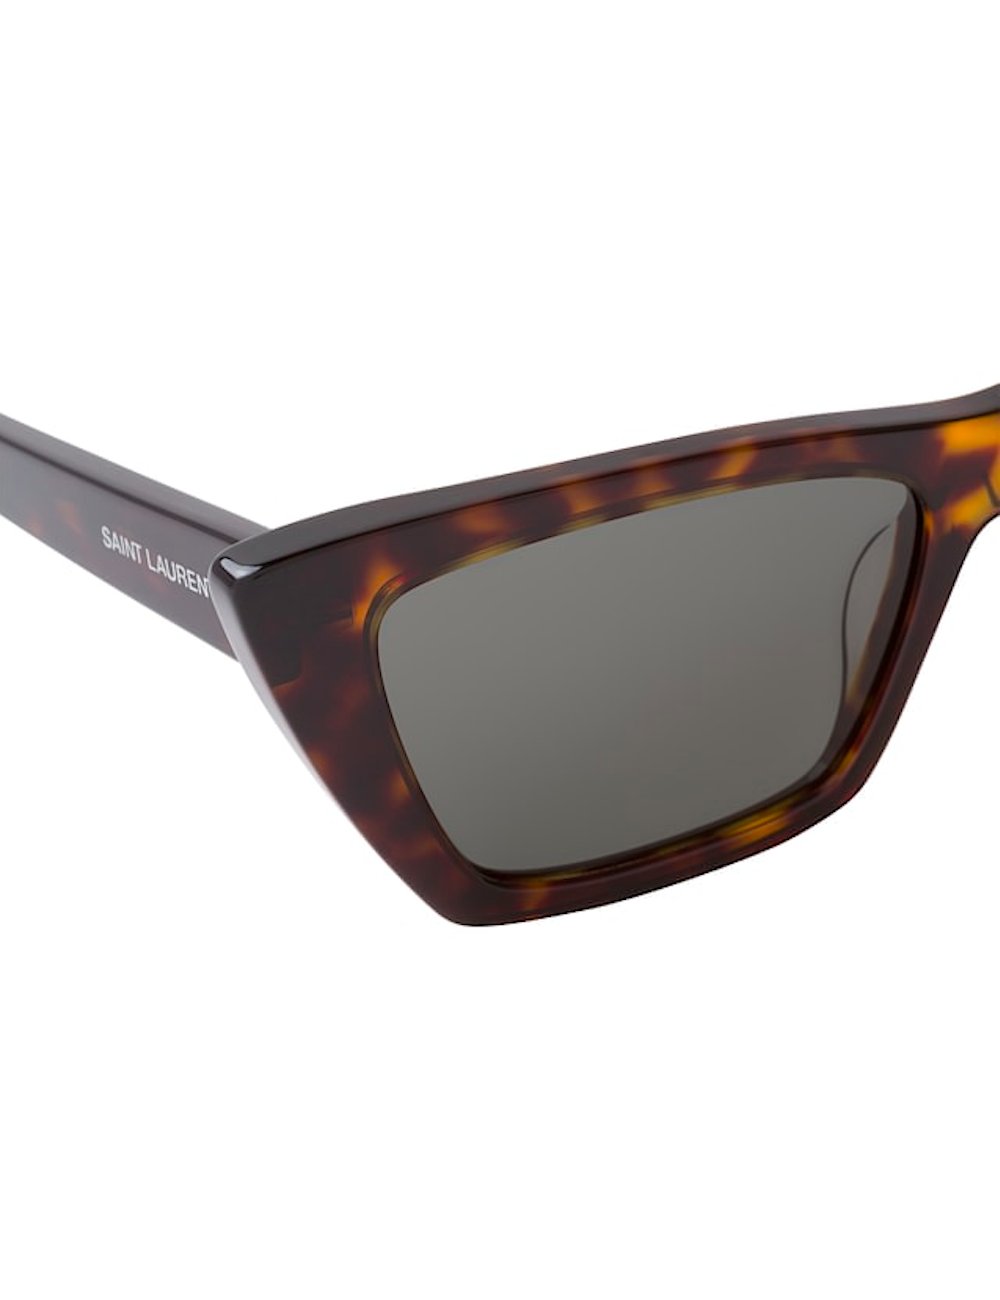 Sunglasses Saint Laurent SL 276 Mica 002